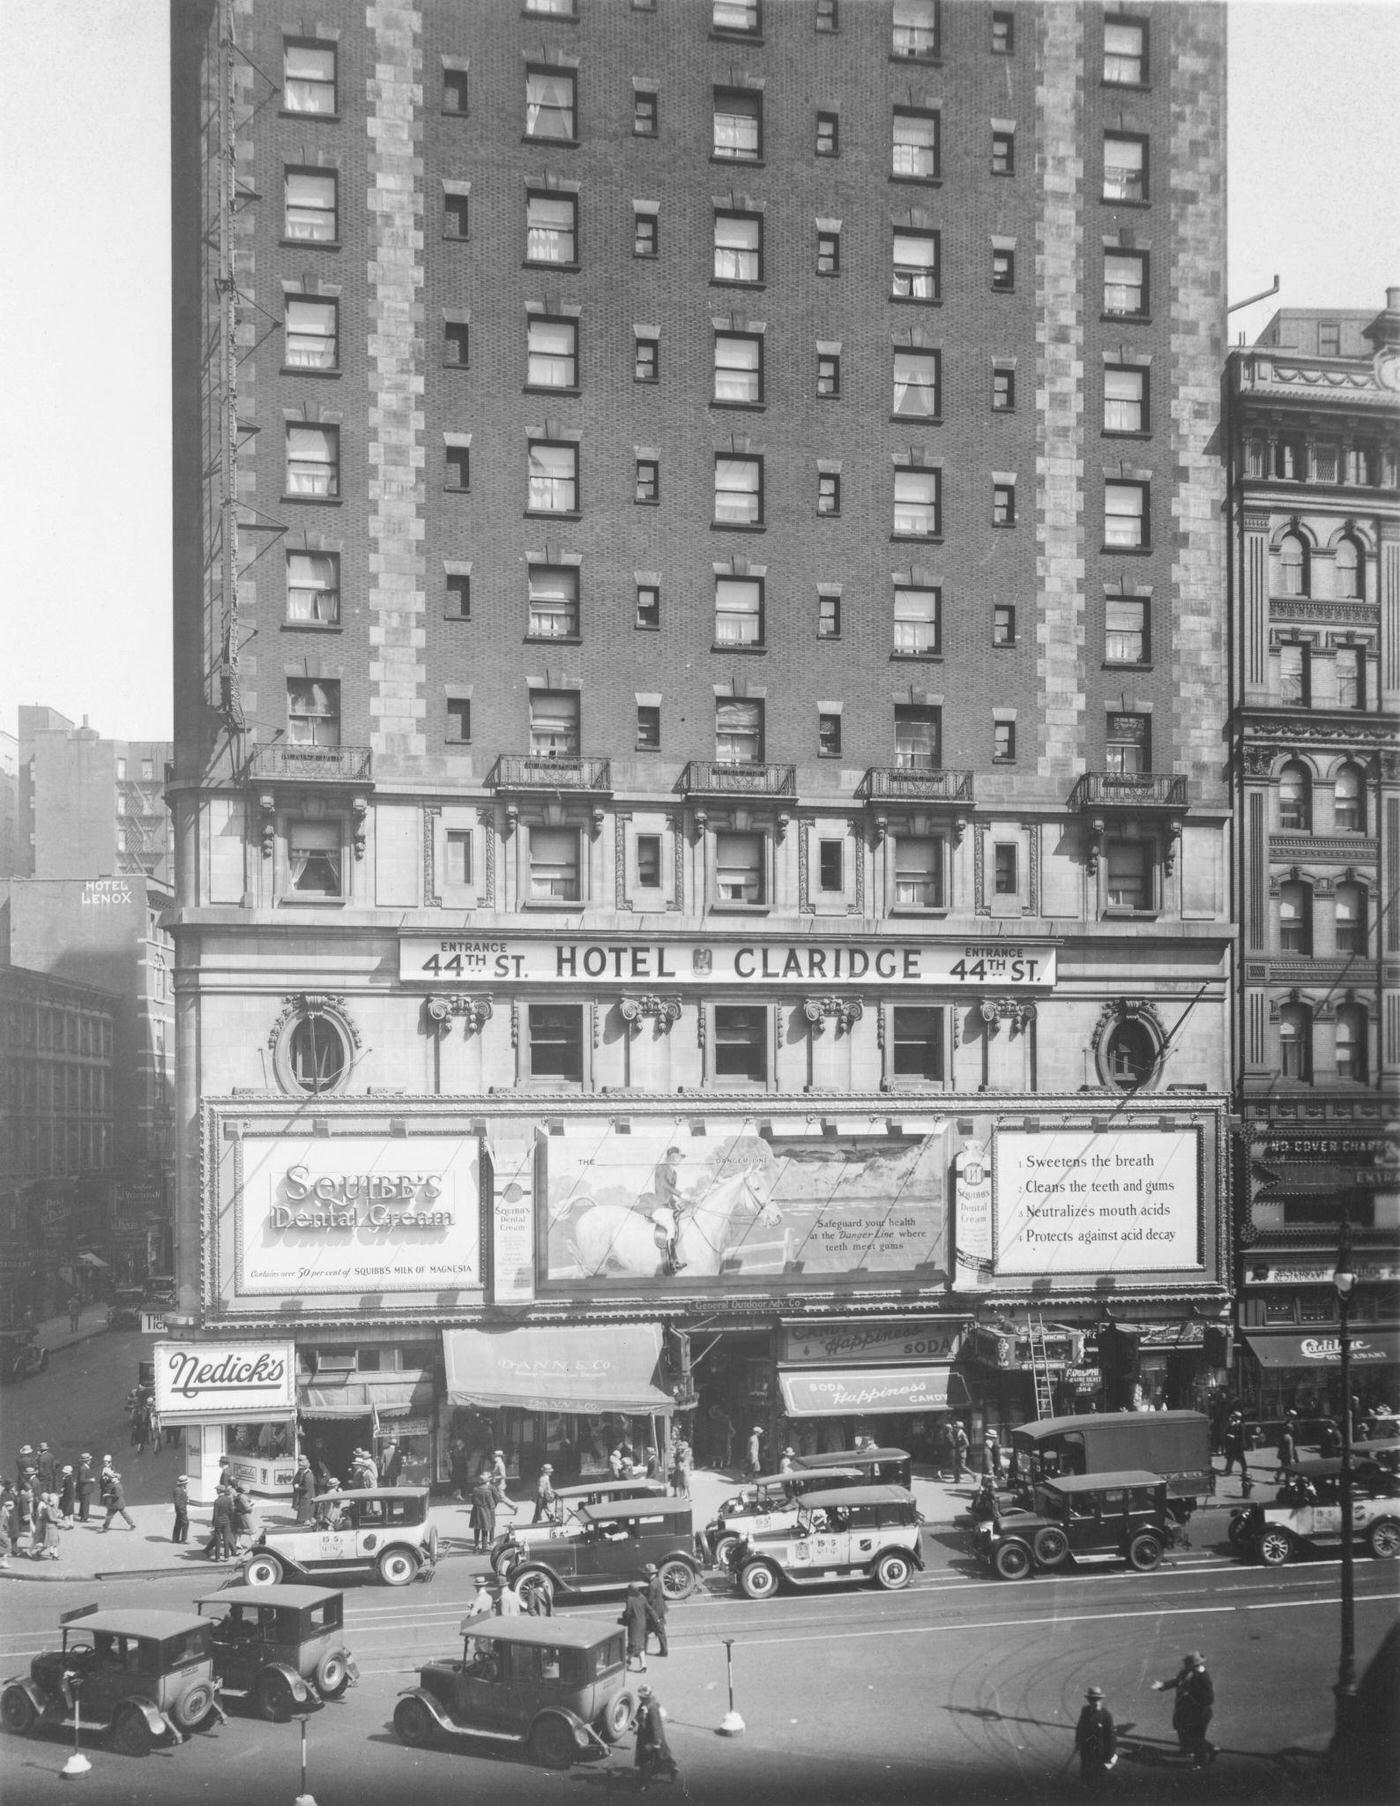 Hotel Claridge, Broadway And 44Th Street, New York City, 1929.